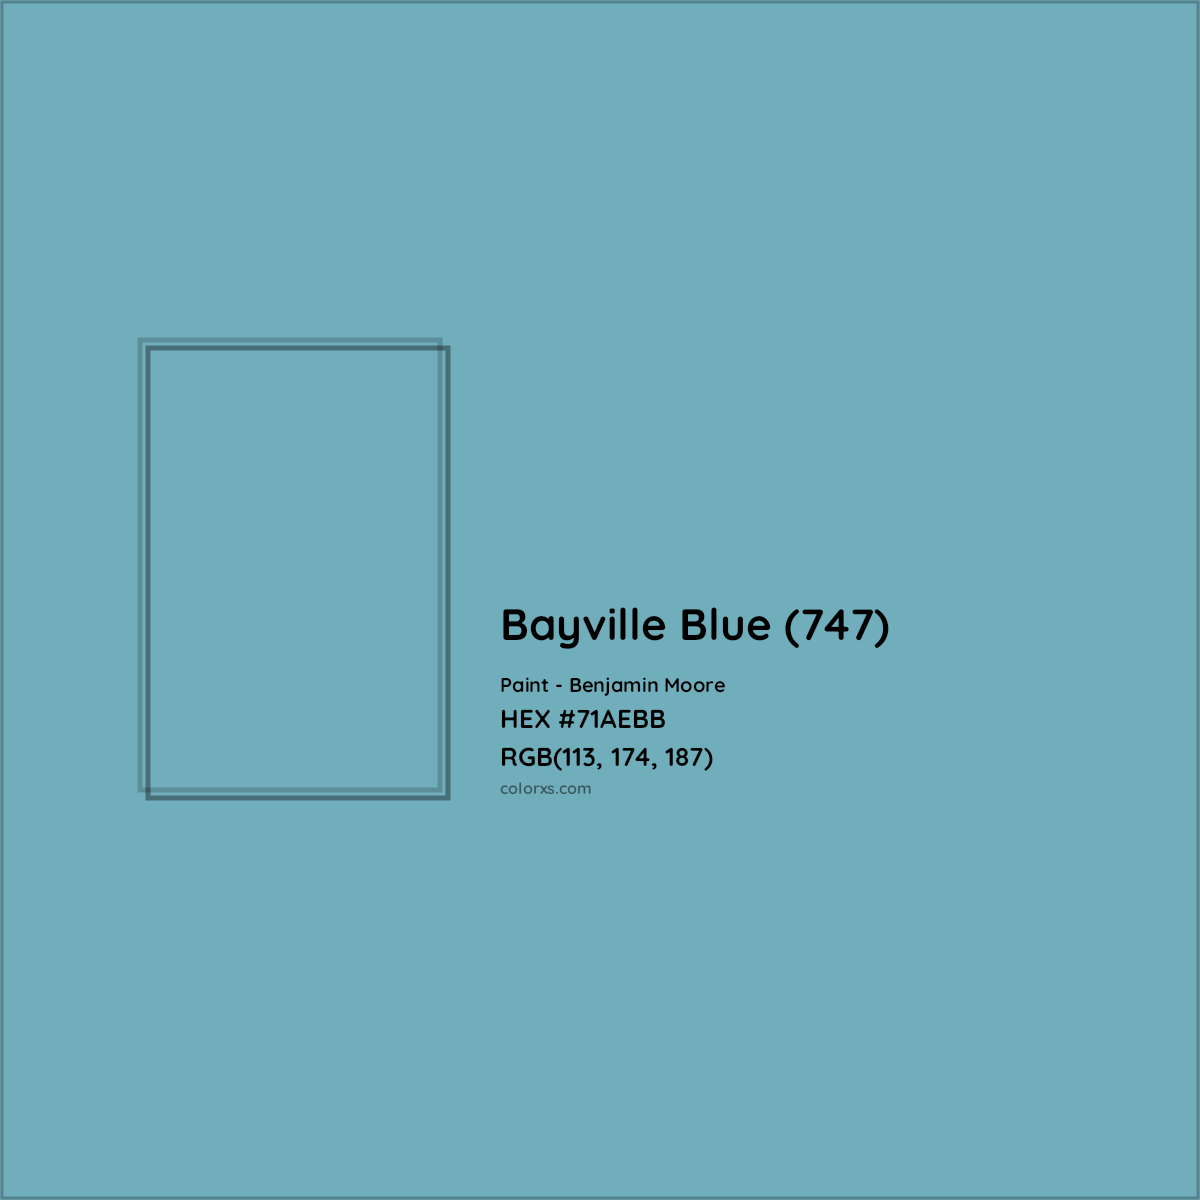 HEX #71AEBB Bayville Blue (747) Paint Benjamin Moore - Color Code